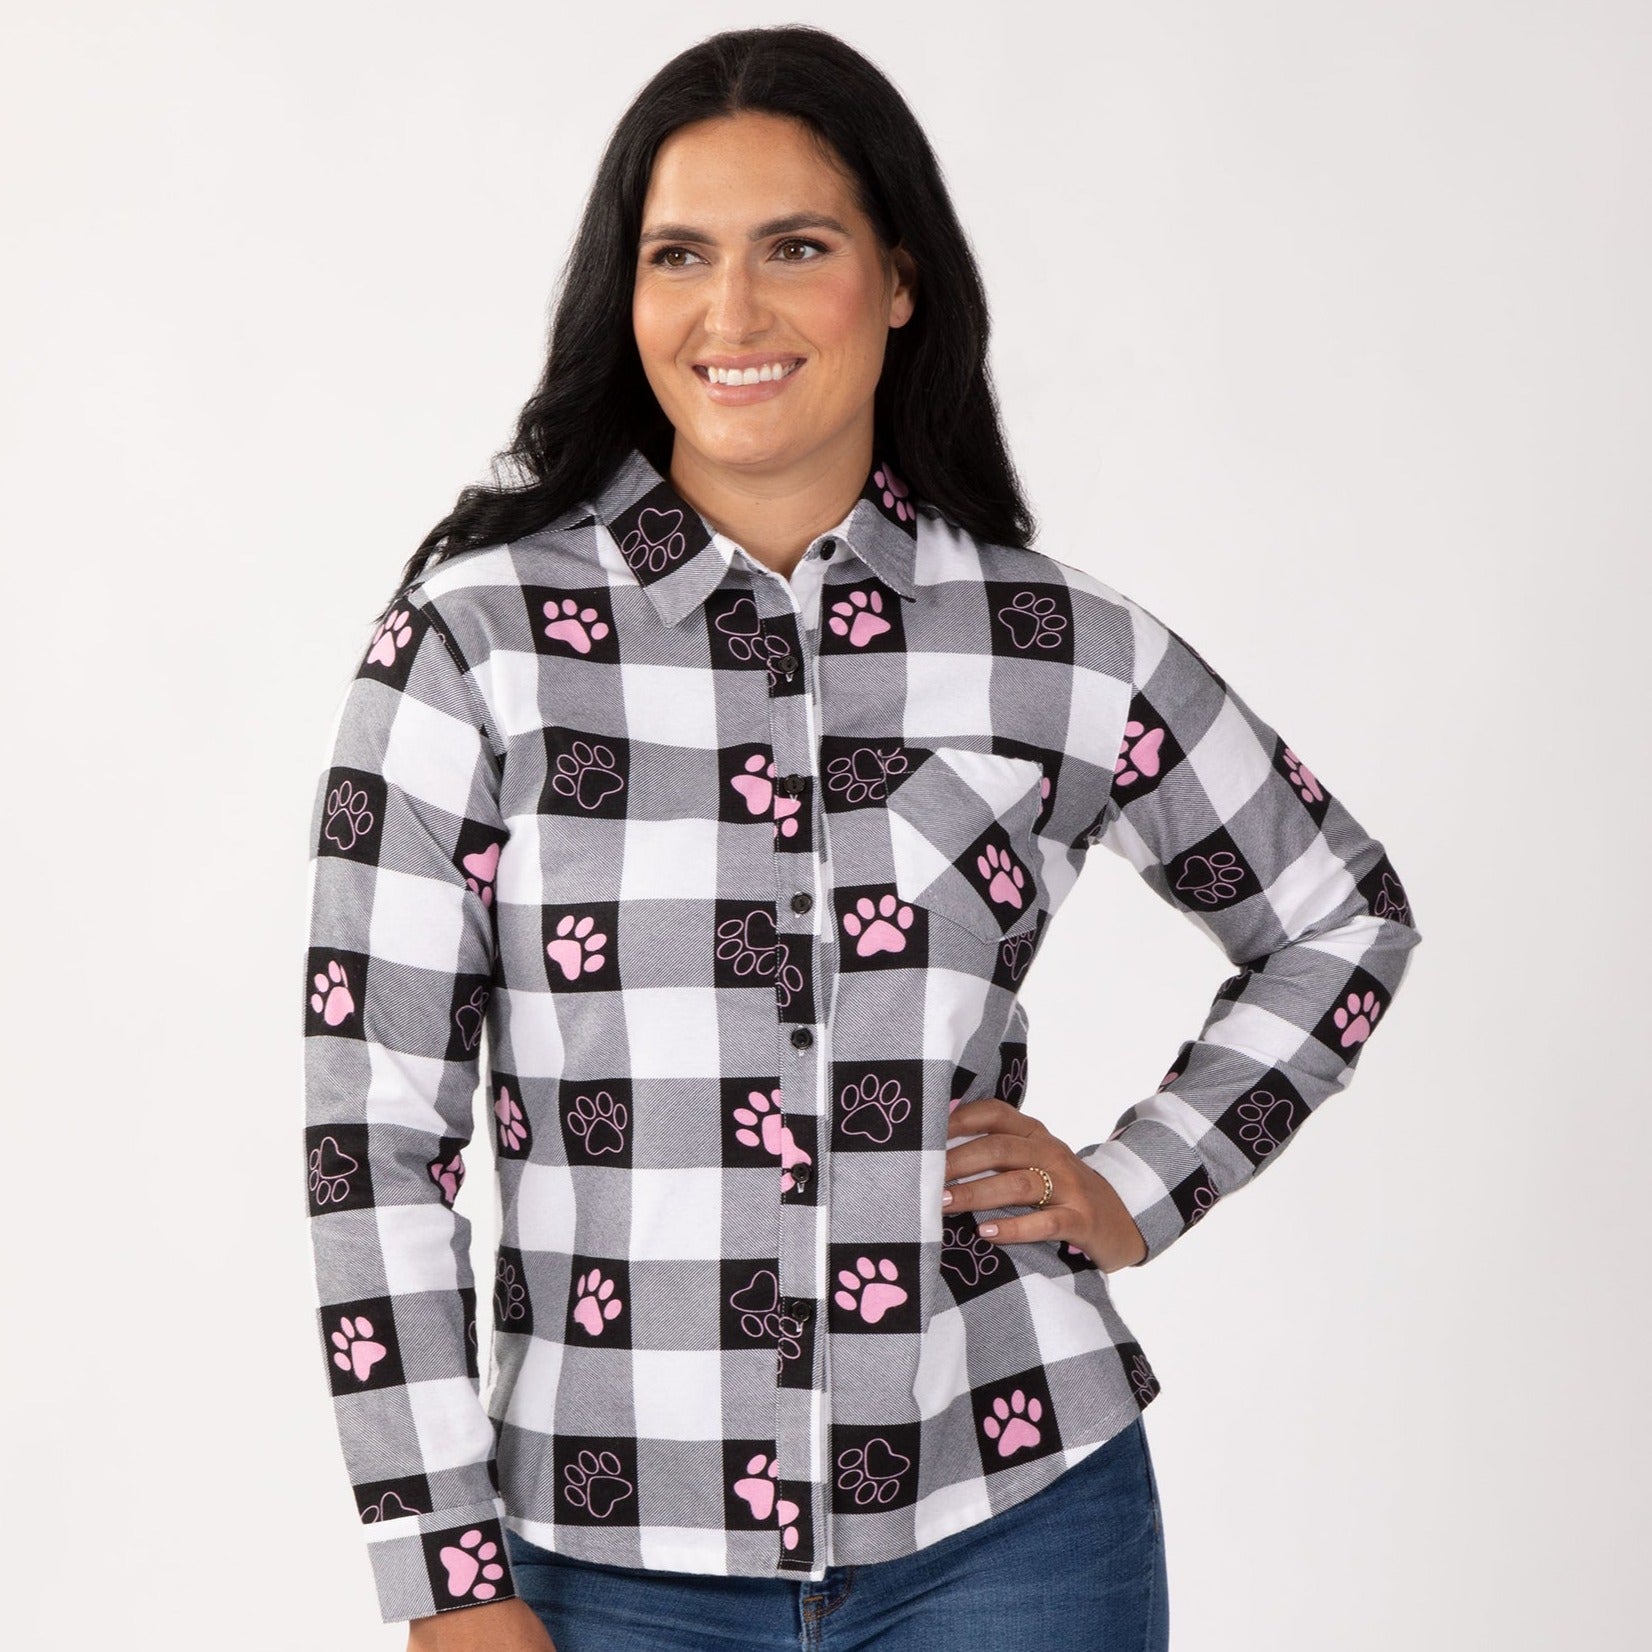 Paw Print Flannel Button Up Shirt - Paw Buffalo Plaid - Pink - L